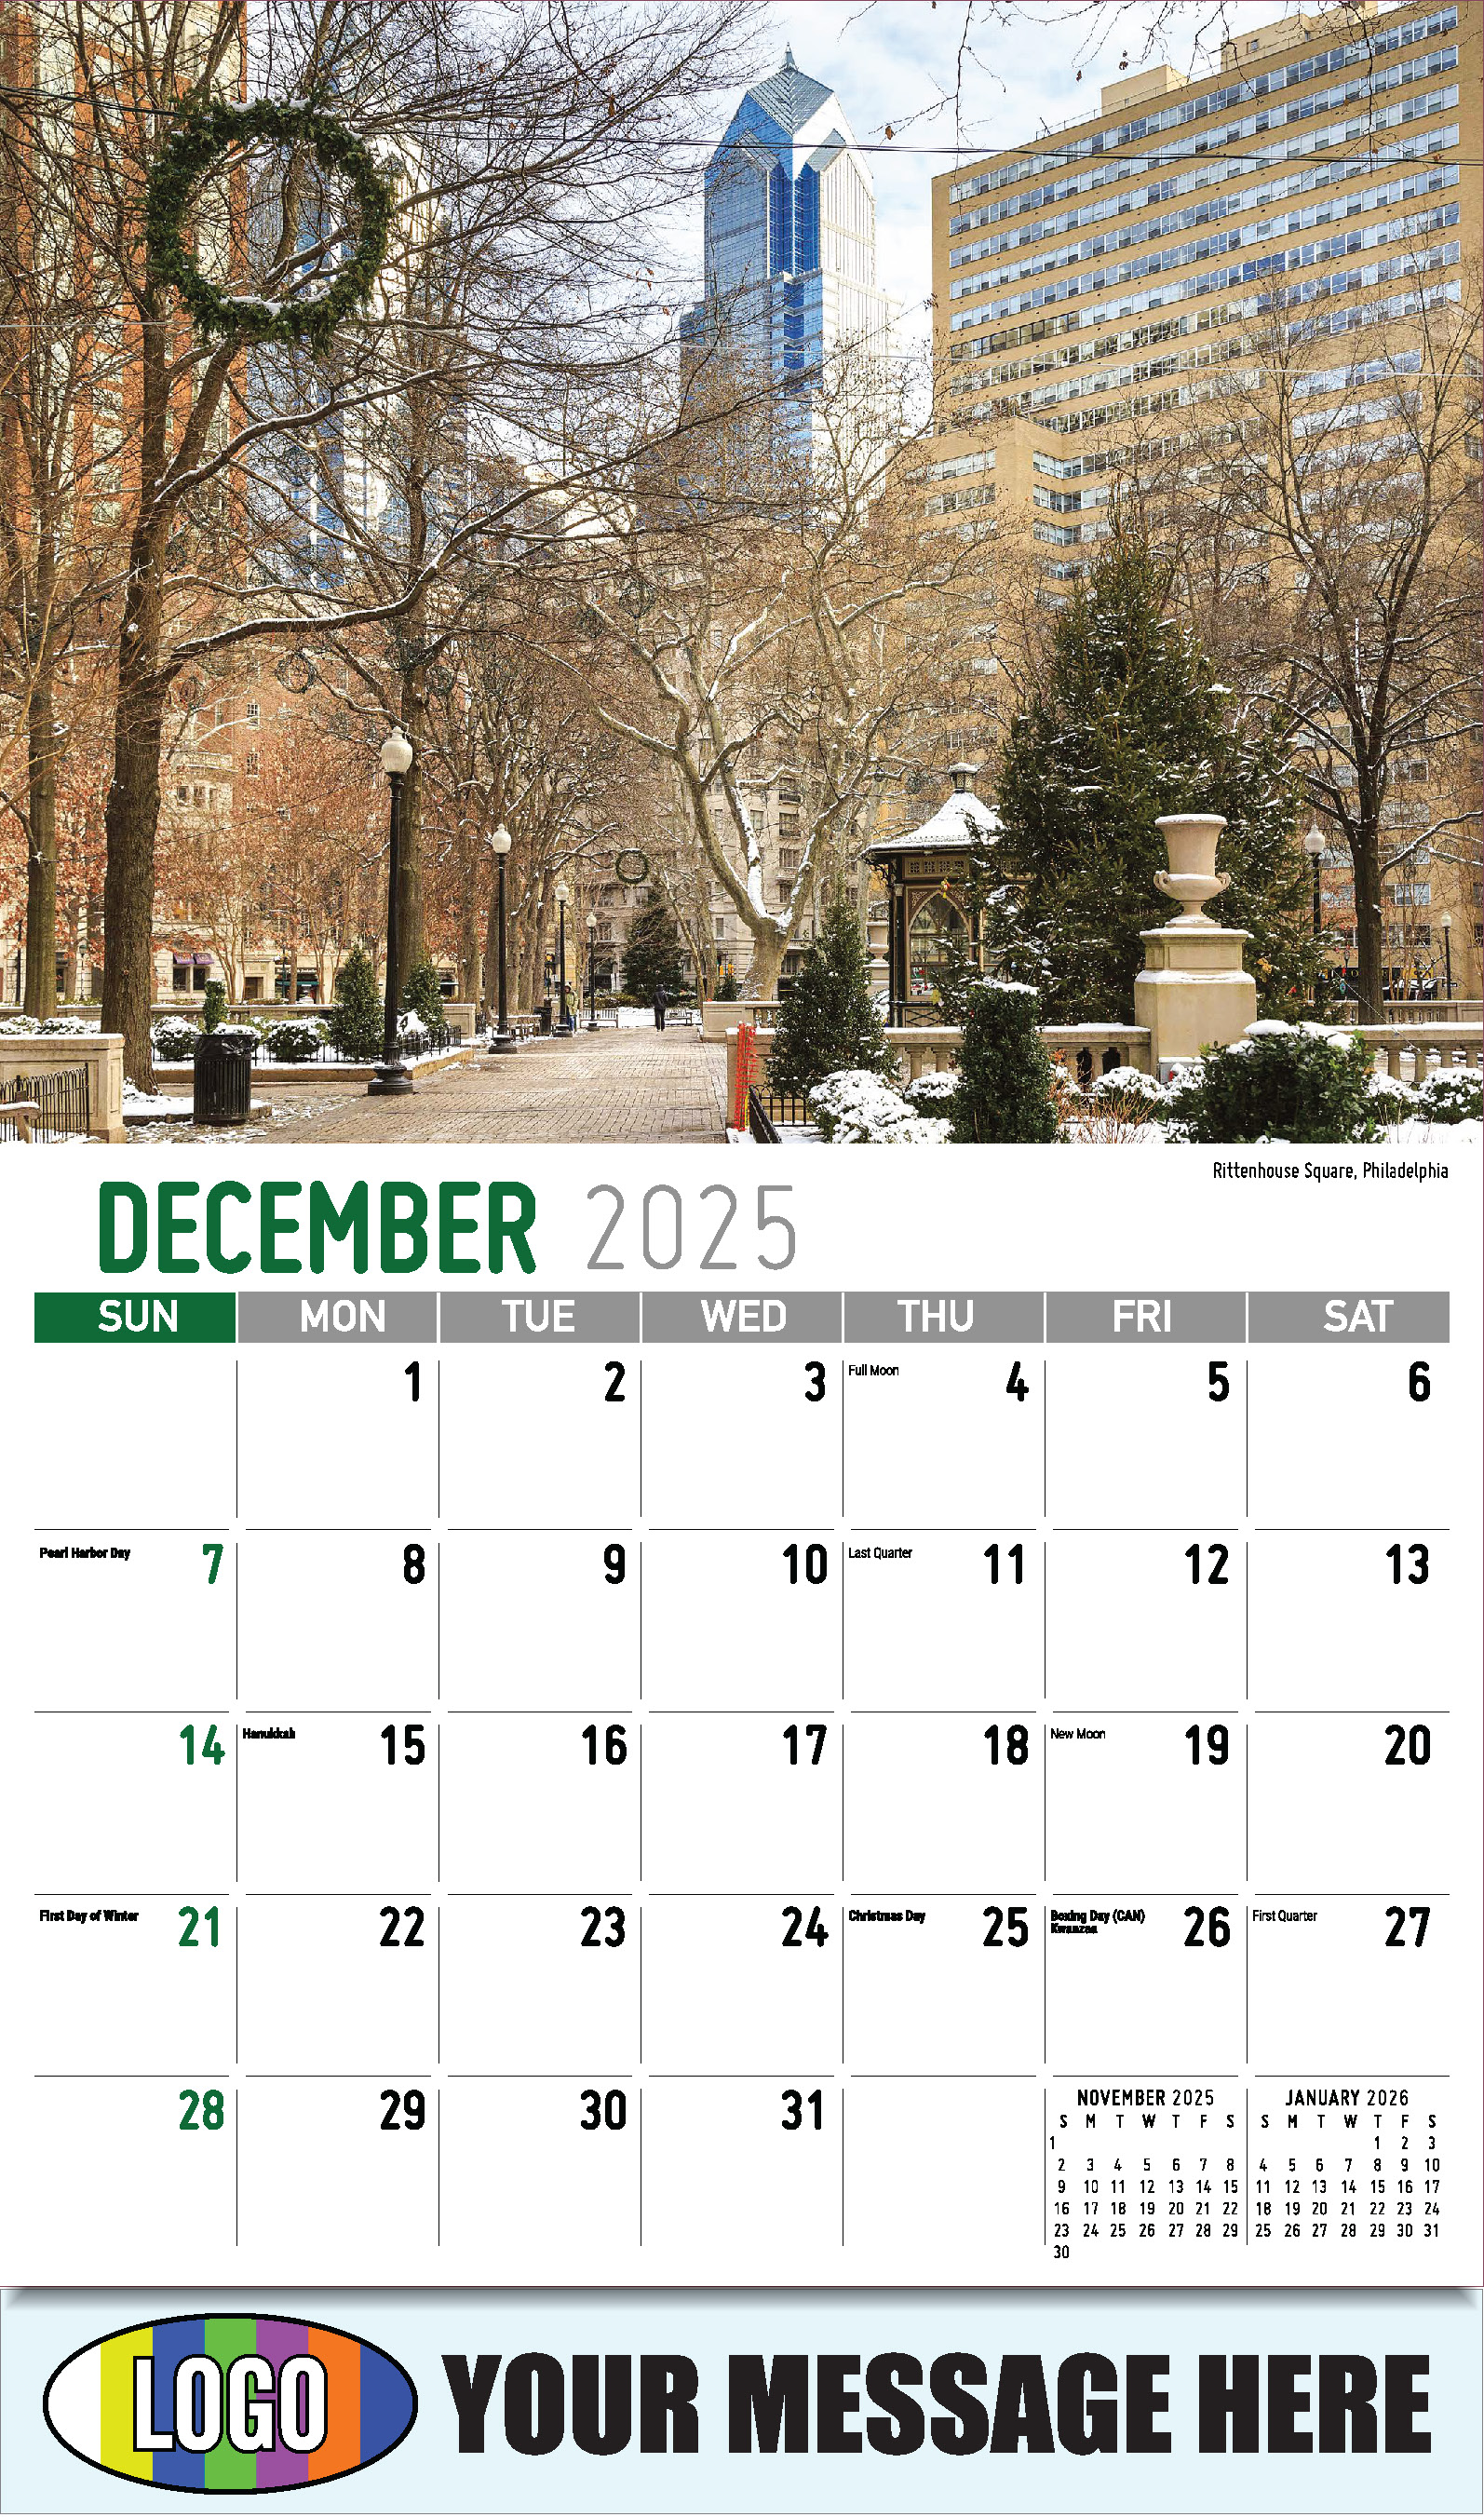 Scenes of America 2025 Business Advertising Wall Calendar - December